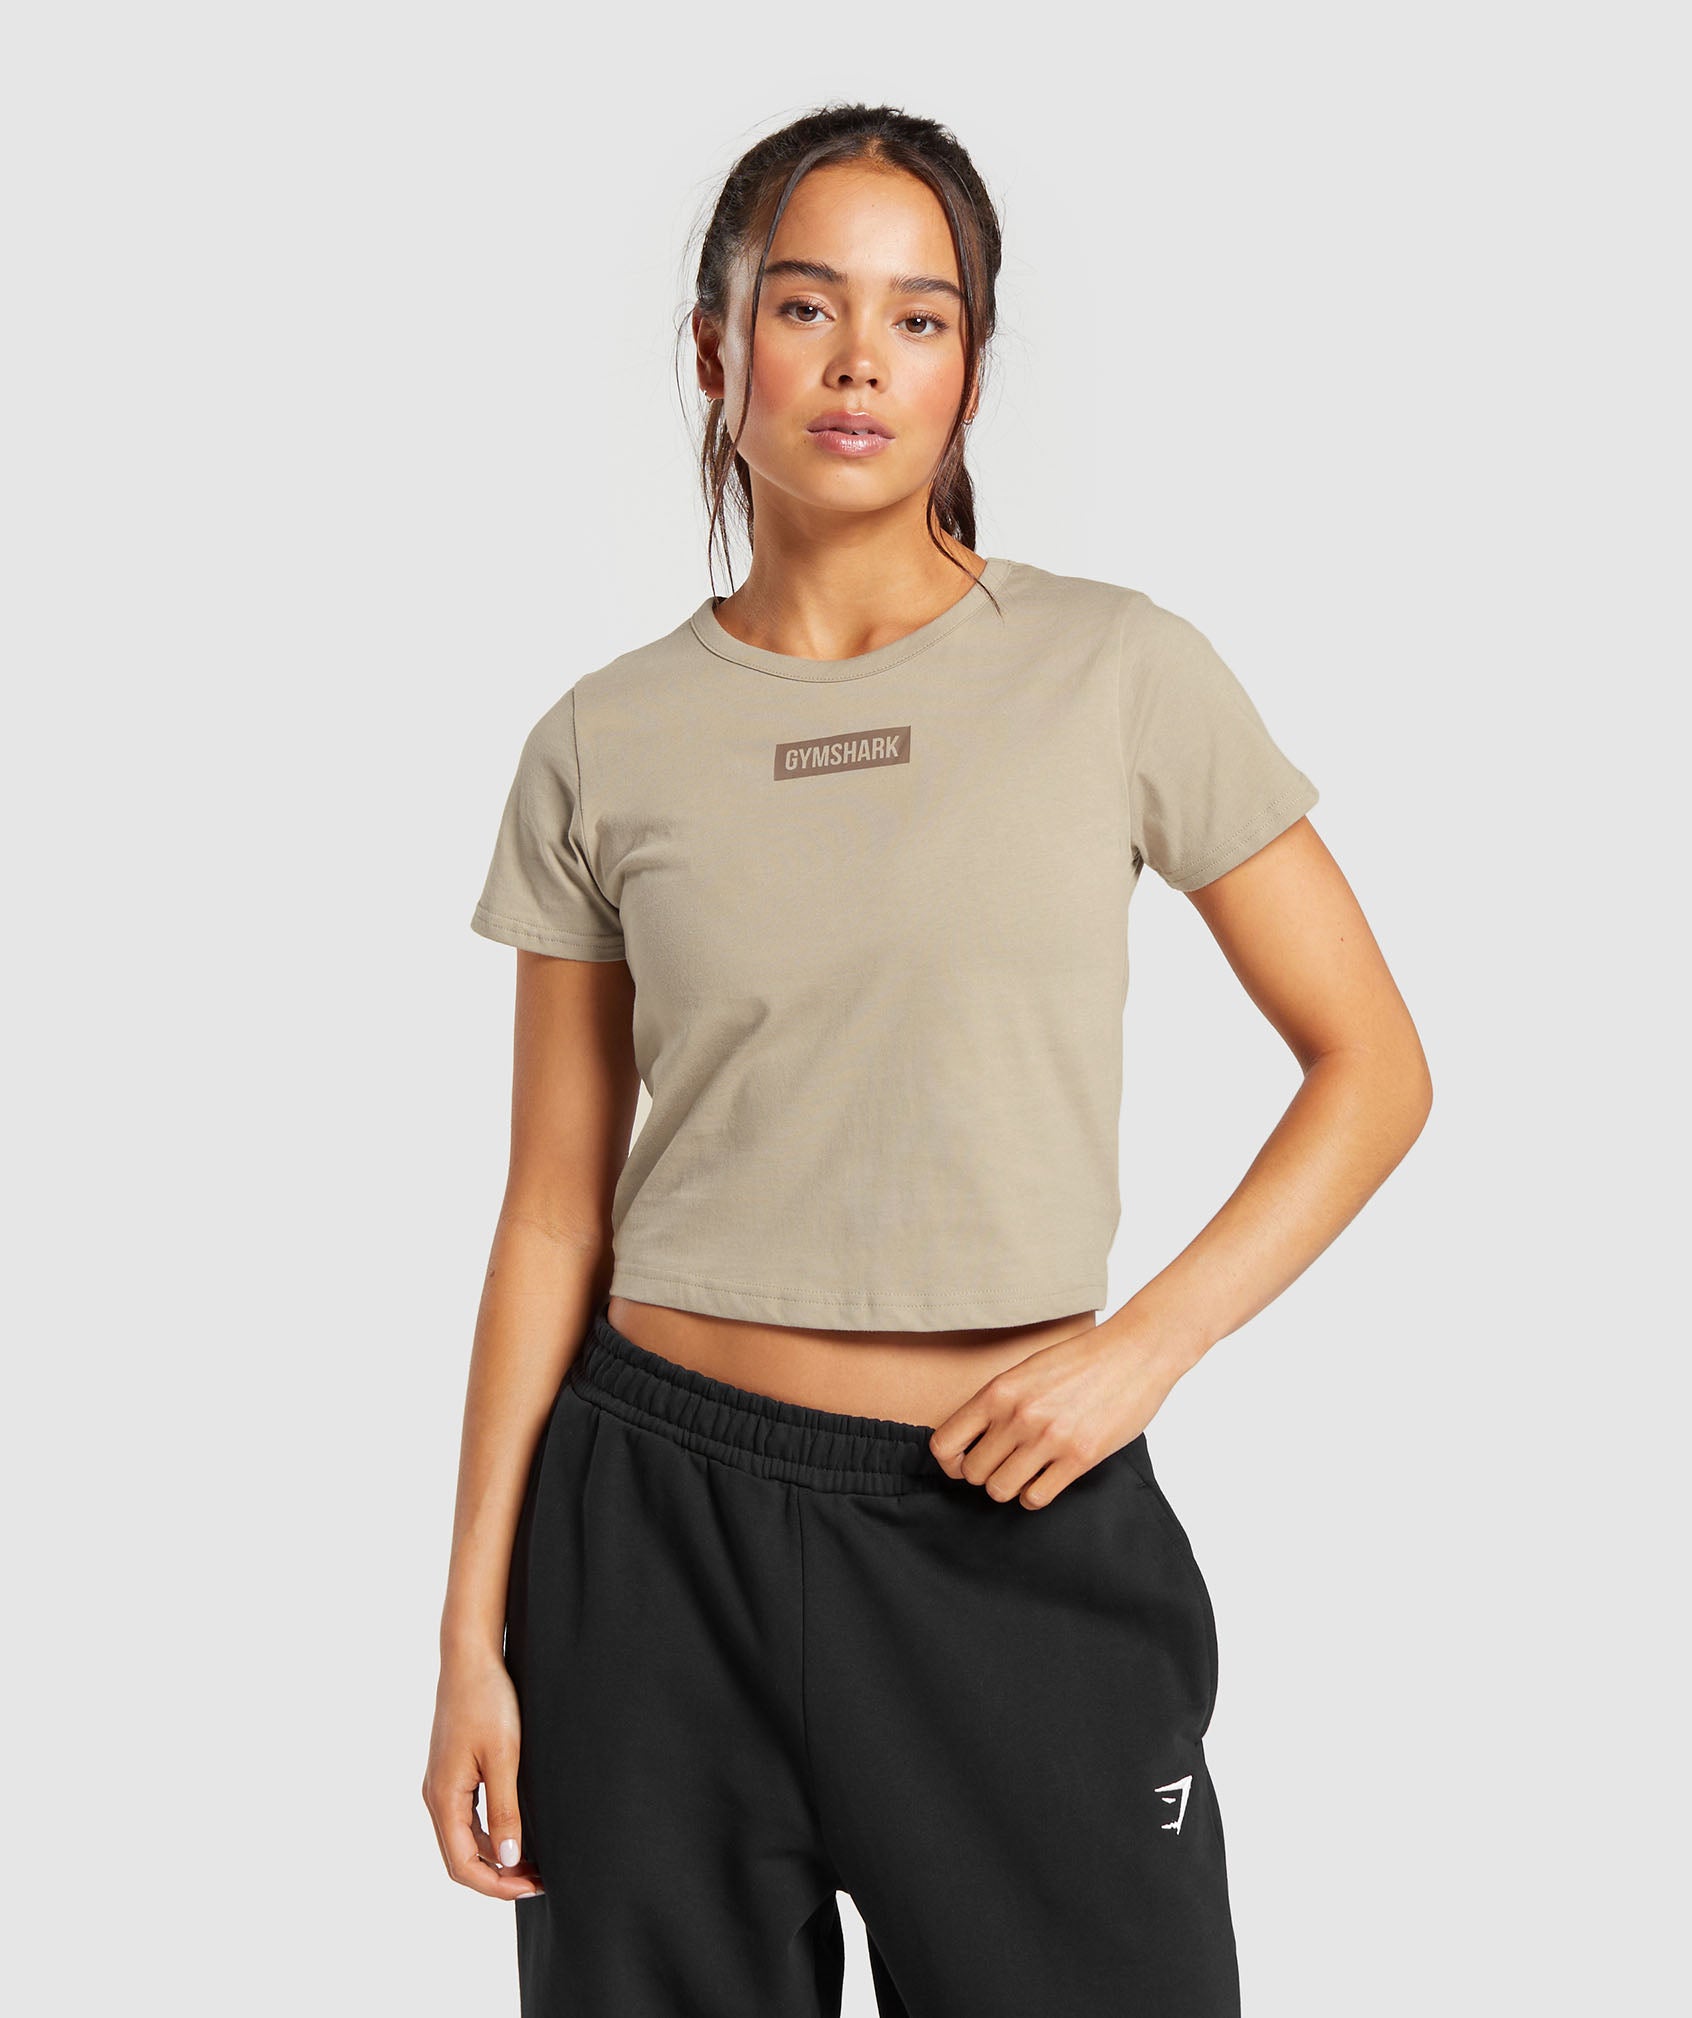 Gymshark Womens Cropped Training T Shirt Gray Marled Stretch Short Sleeve  XS New